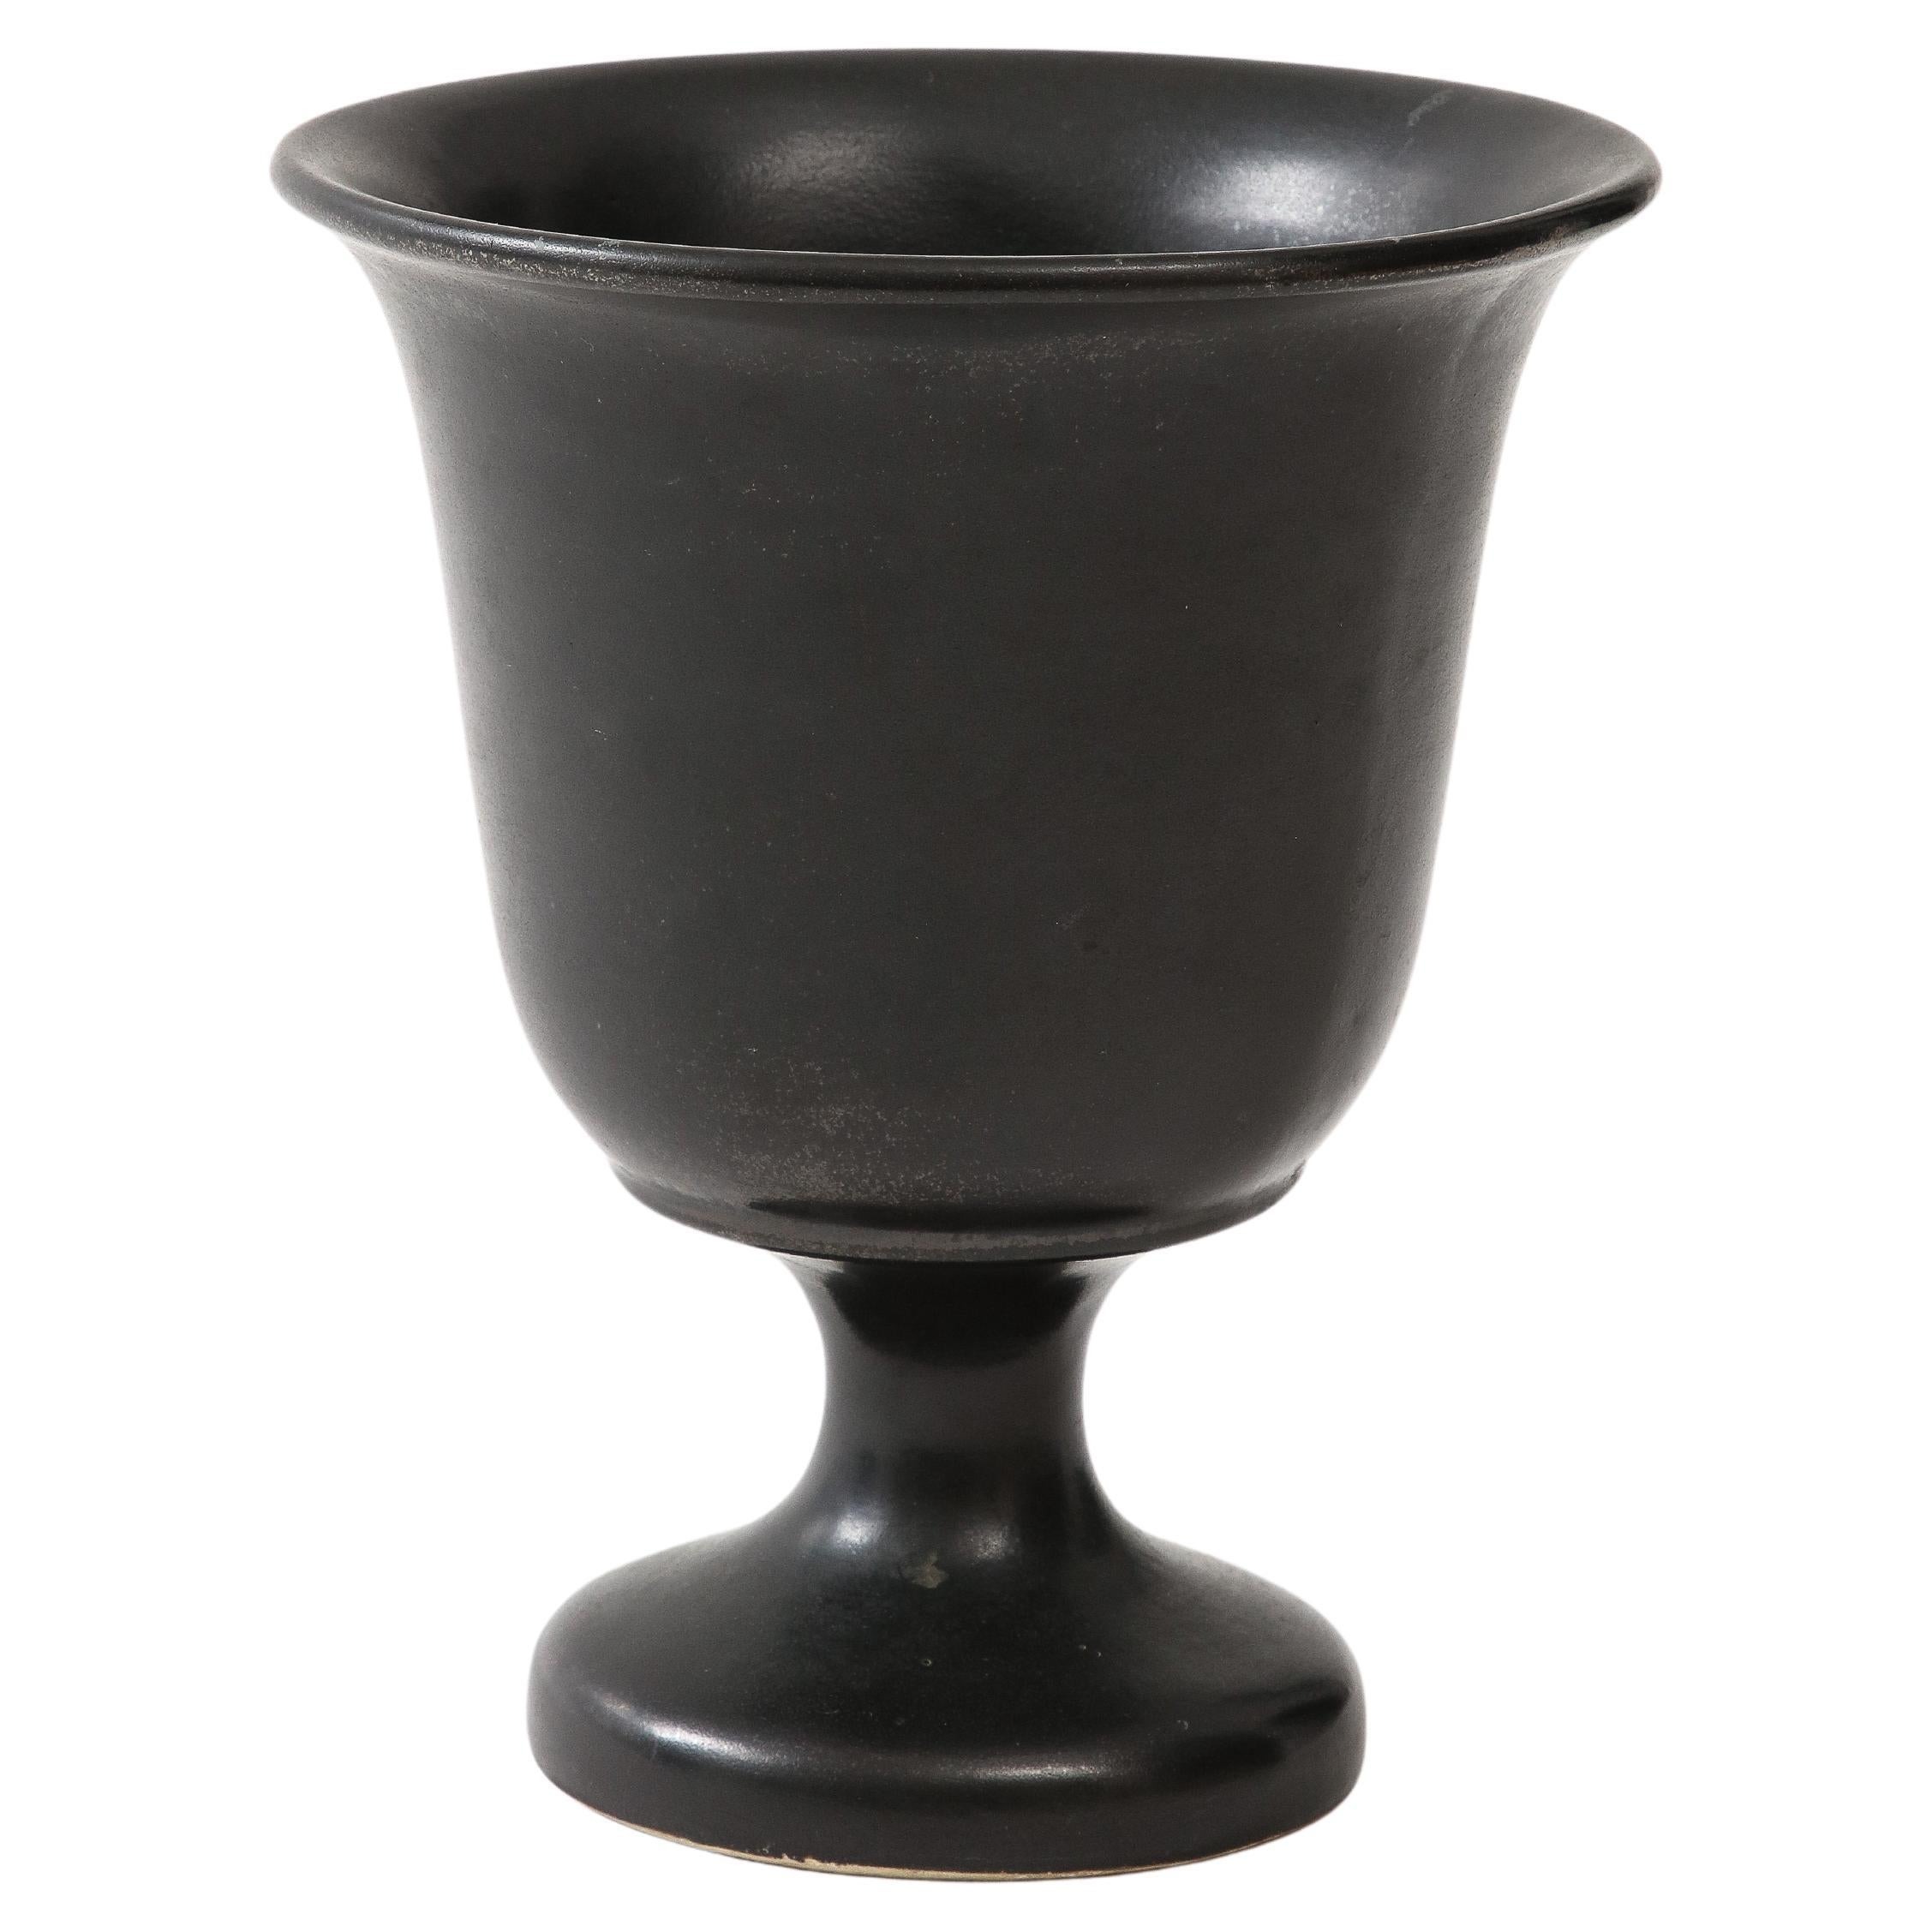 Grand vase calice noir, France, vers 1960, signé "Chambord".